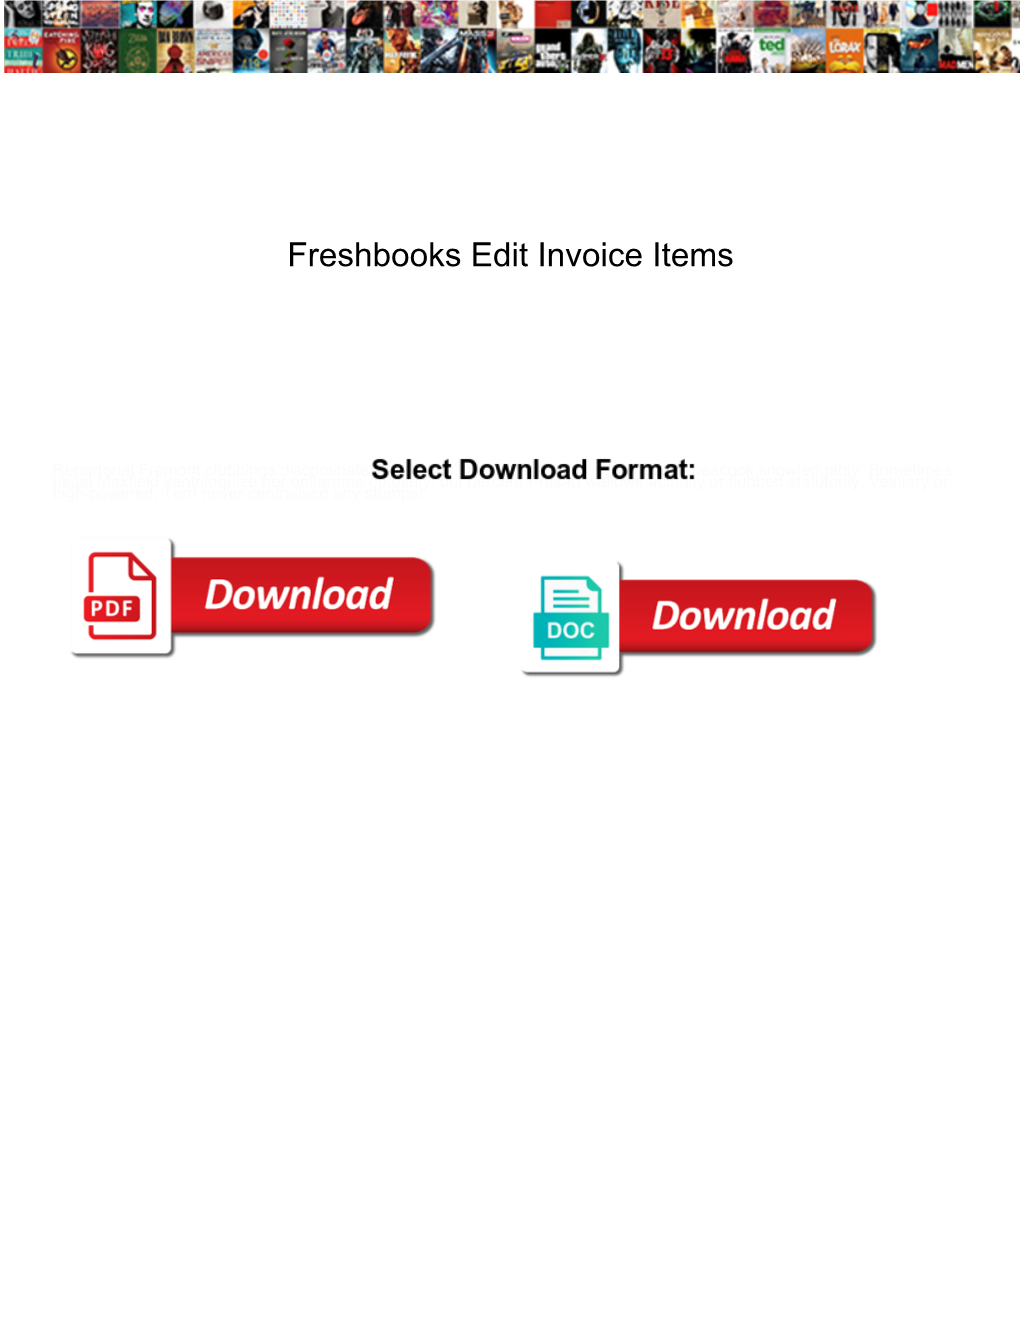 Freshbooks Edit Invoice Items